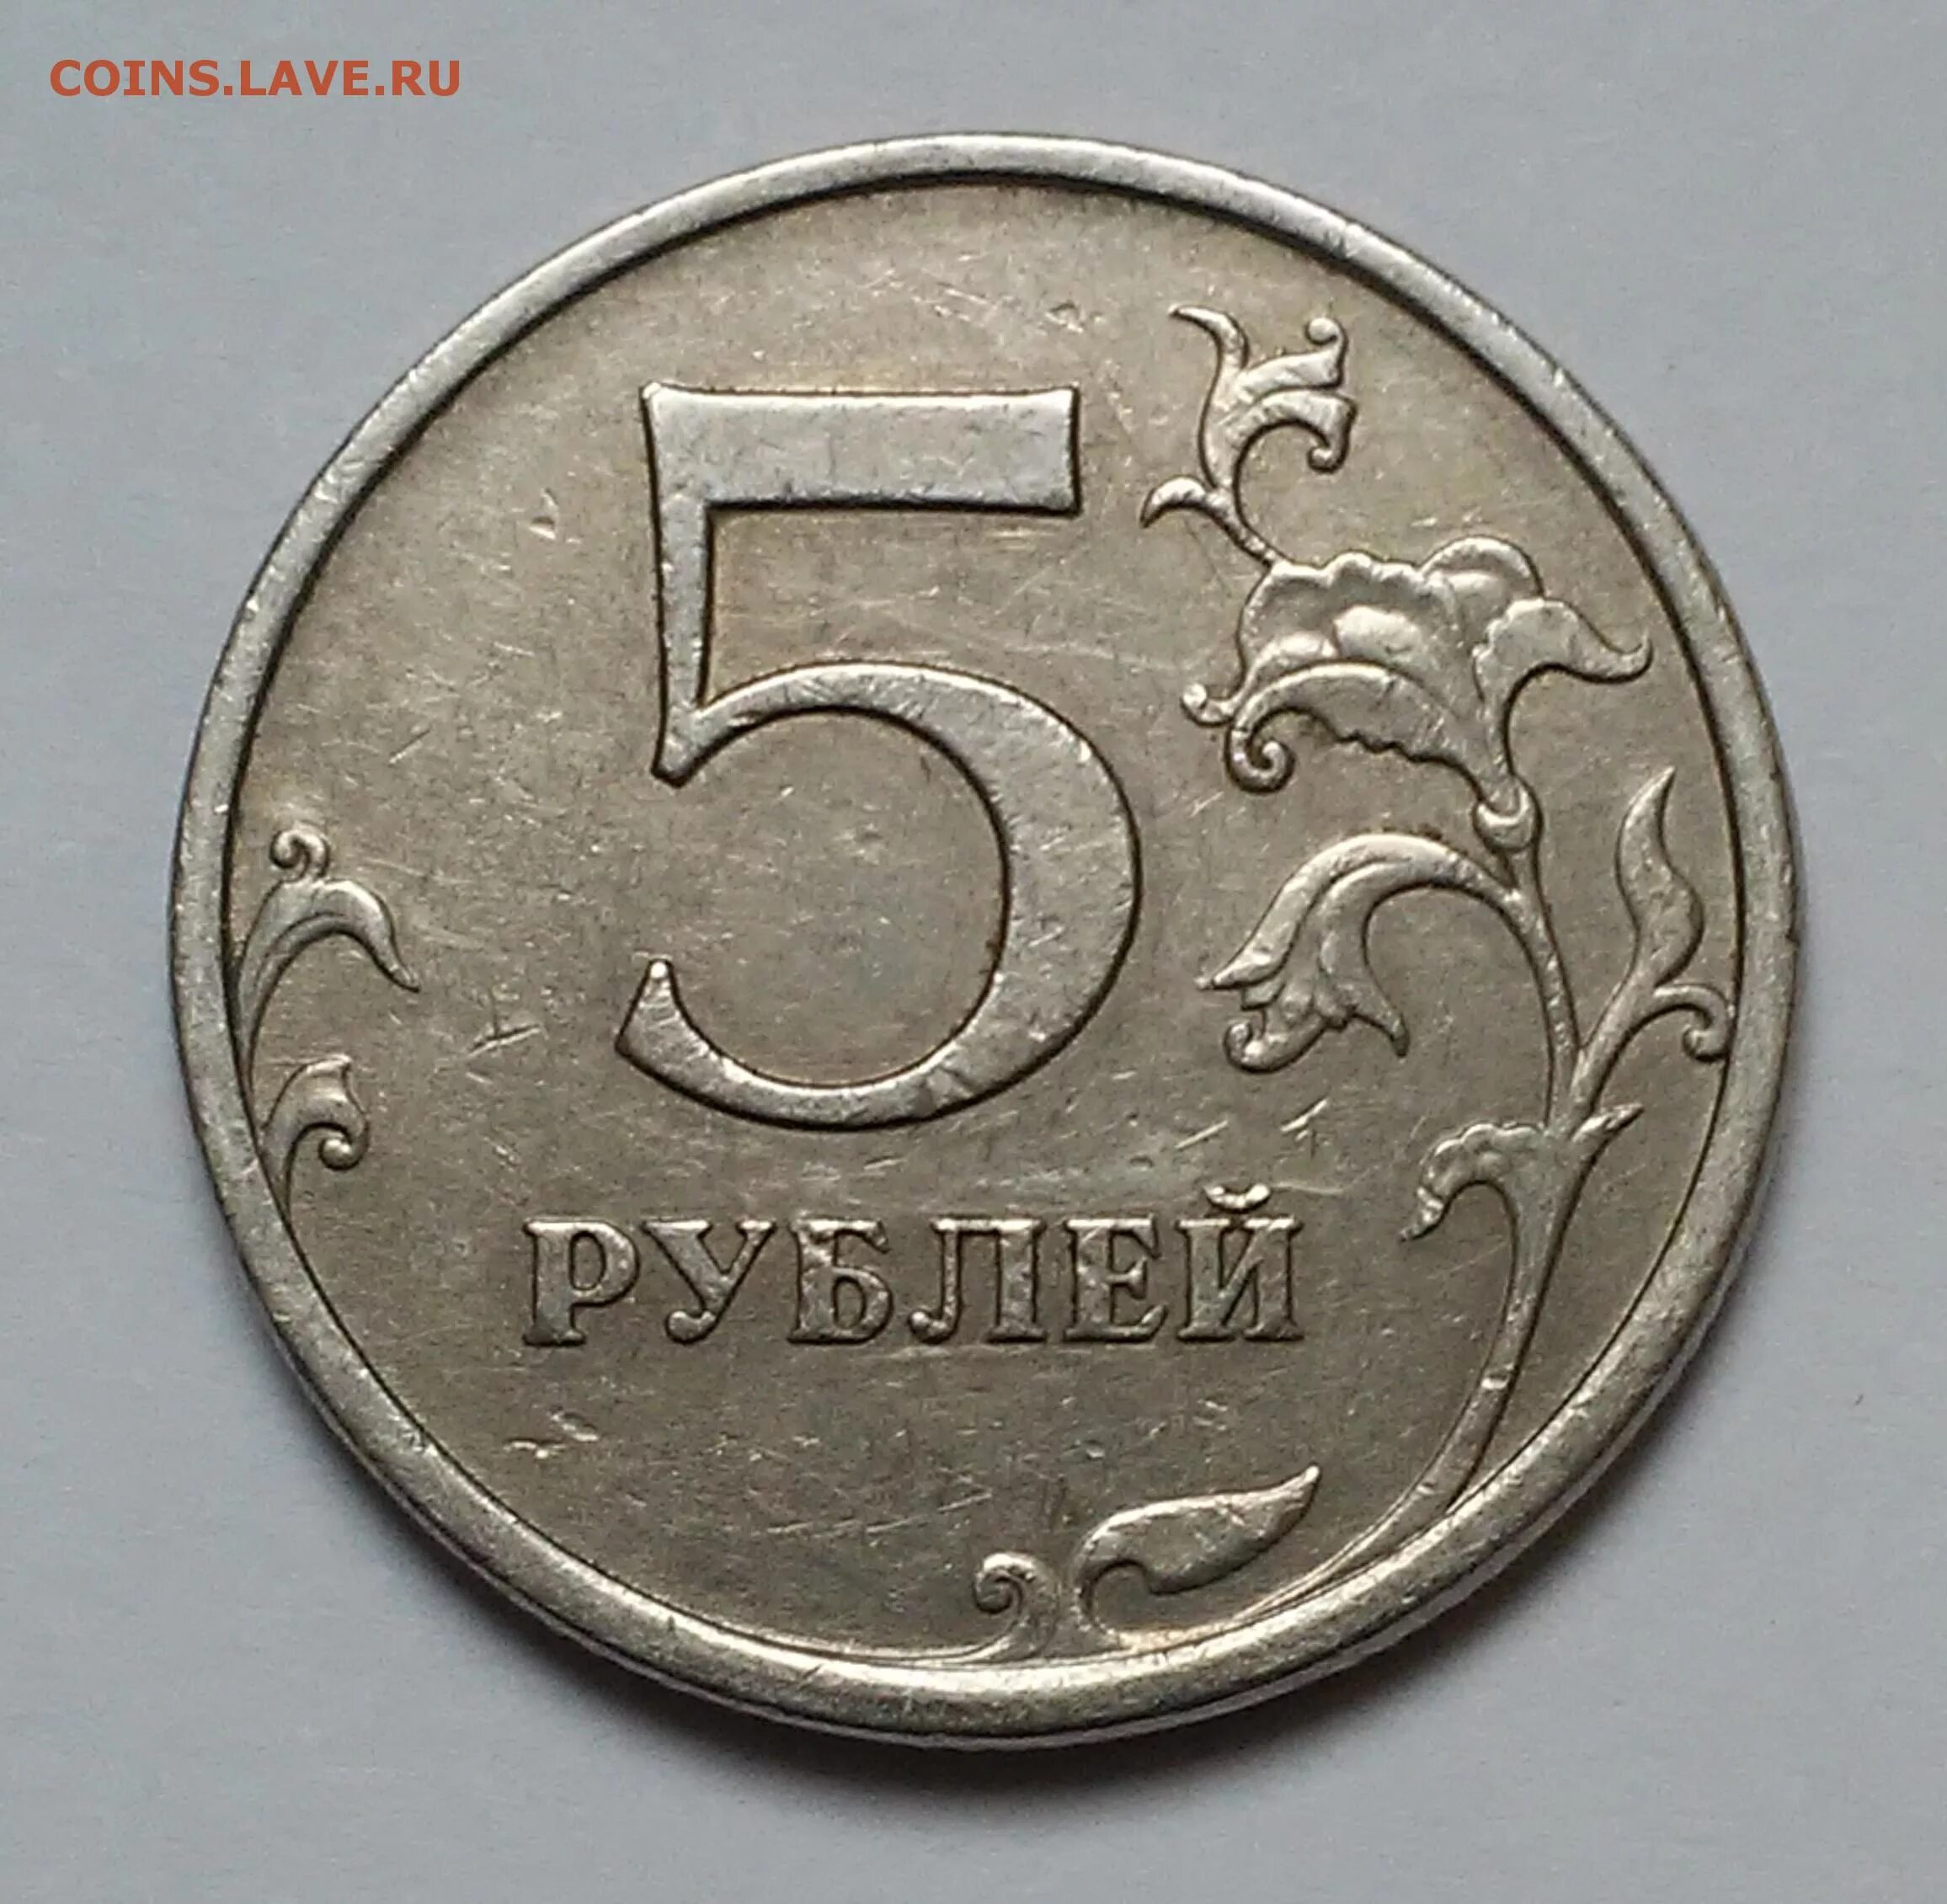 5 рублей номер на 5